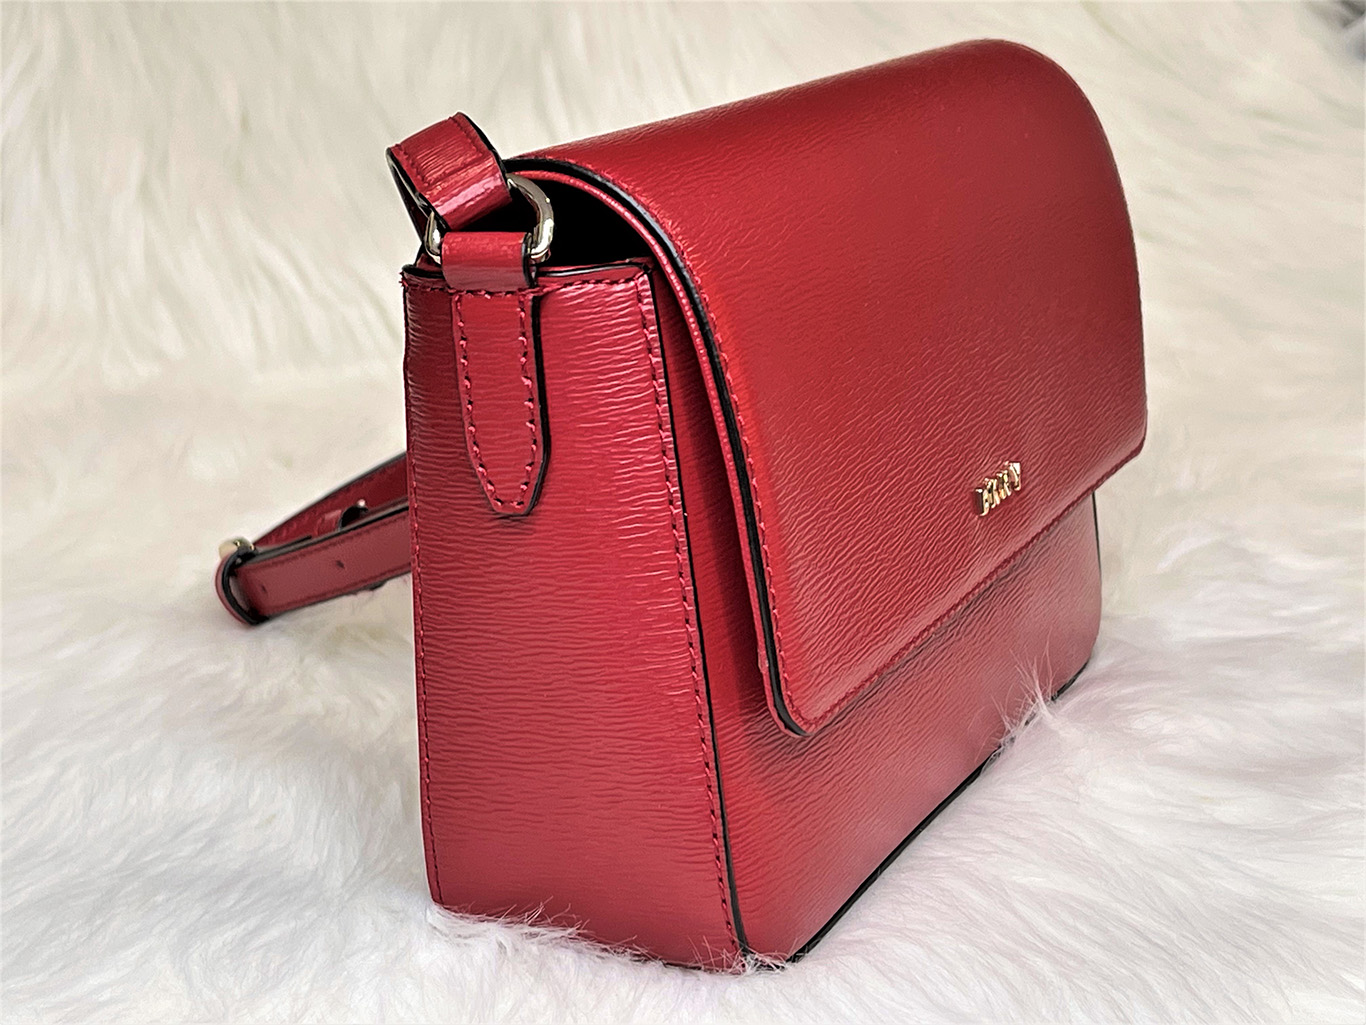 DKNY Small Saffiano Leather Cross-body Bag in Metallic